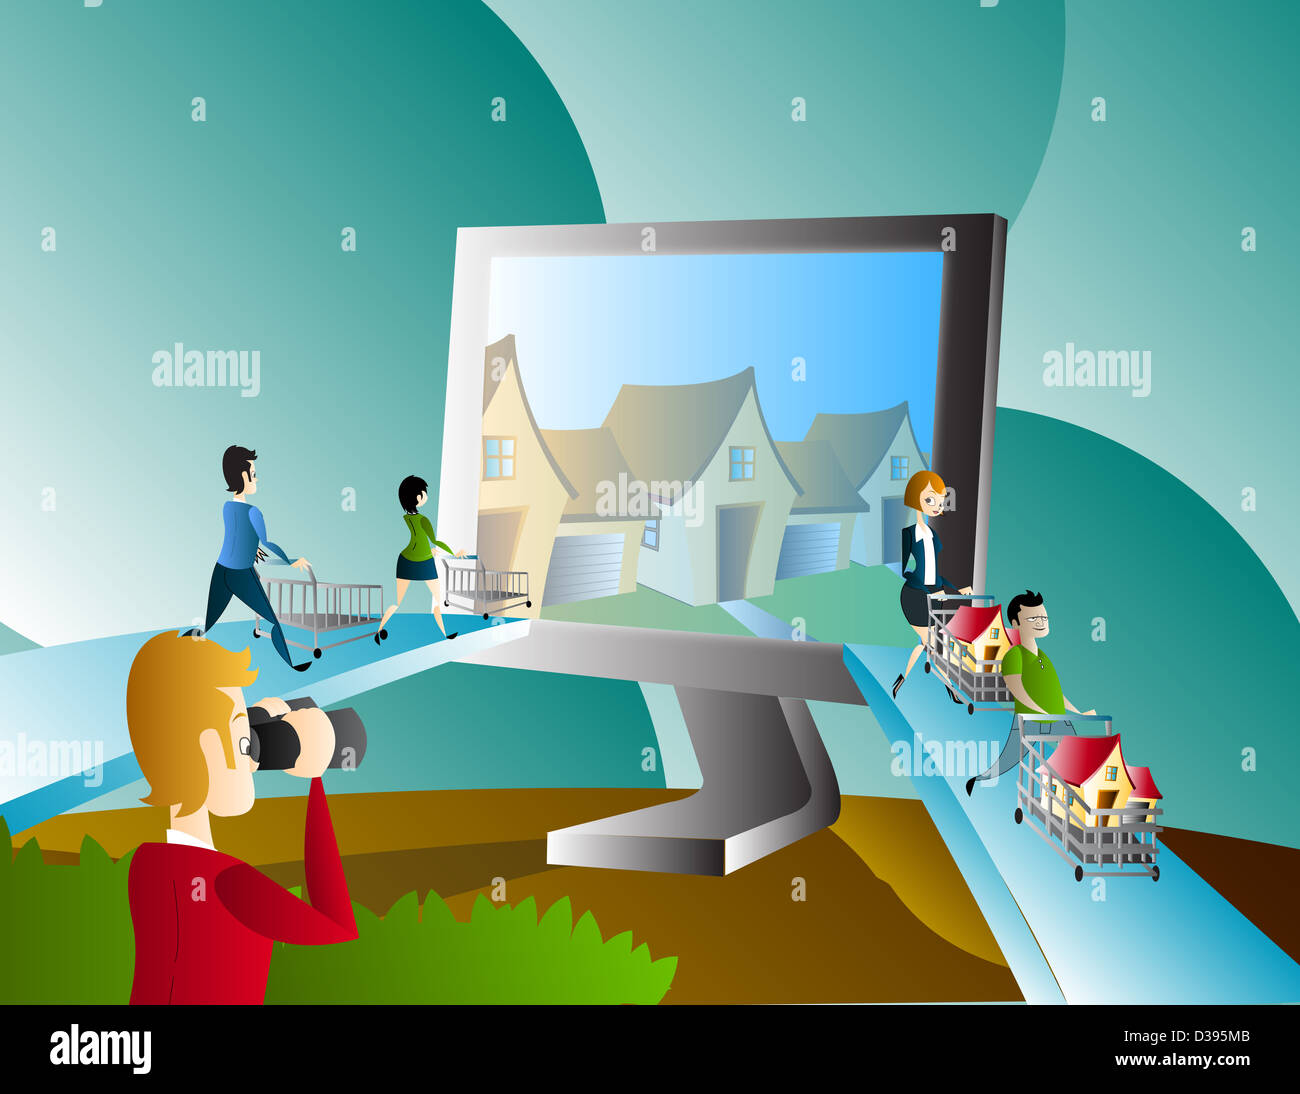 Illustration of online property hunt Stock Photo